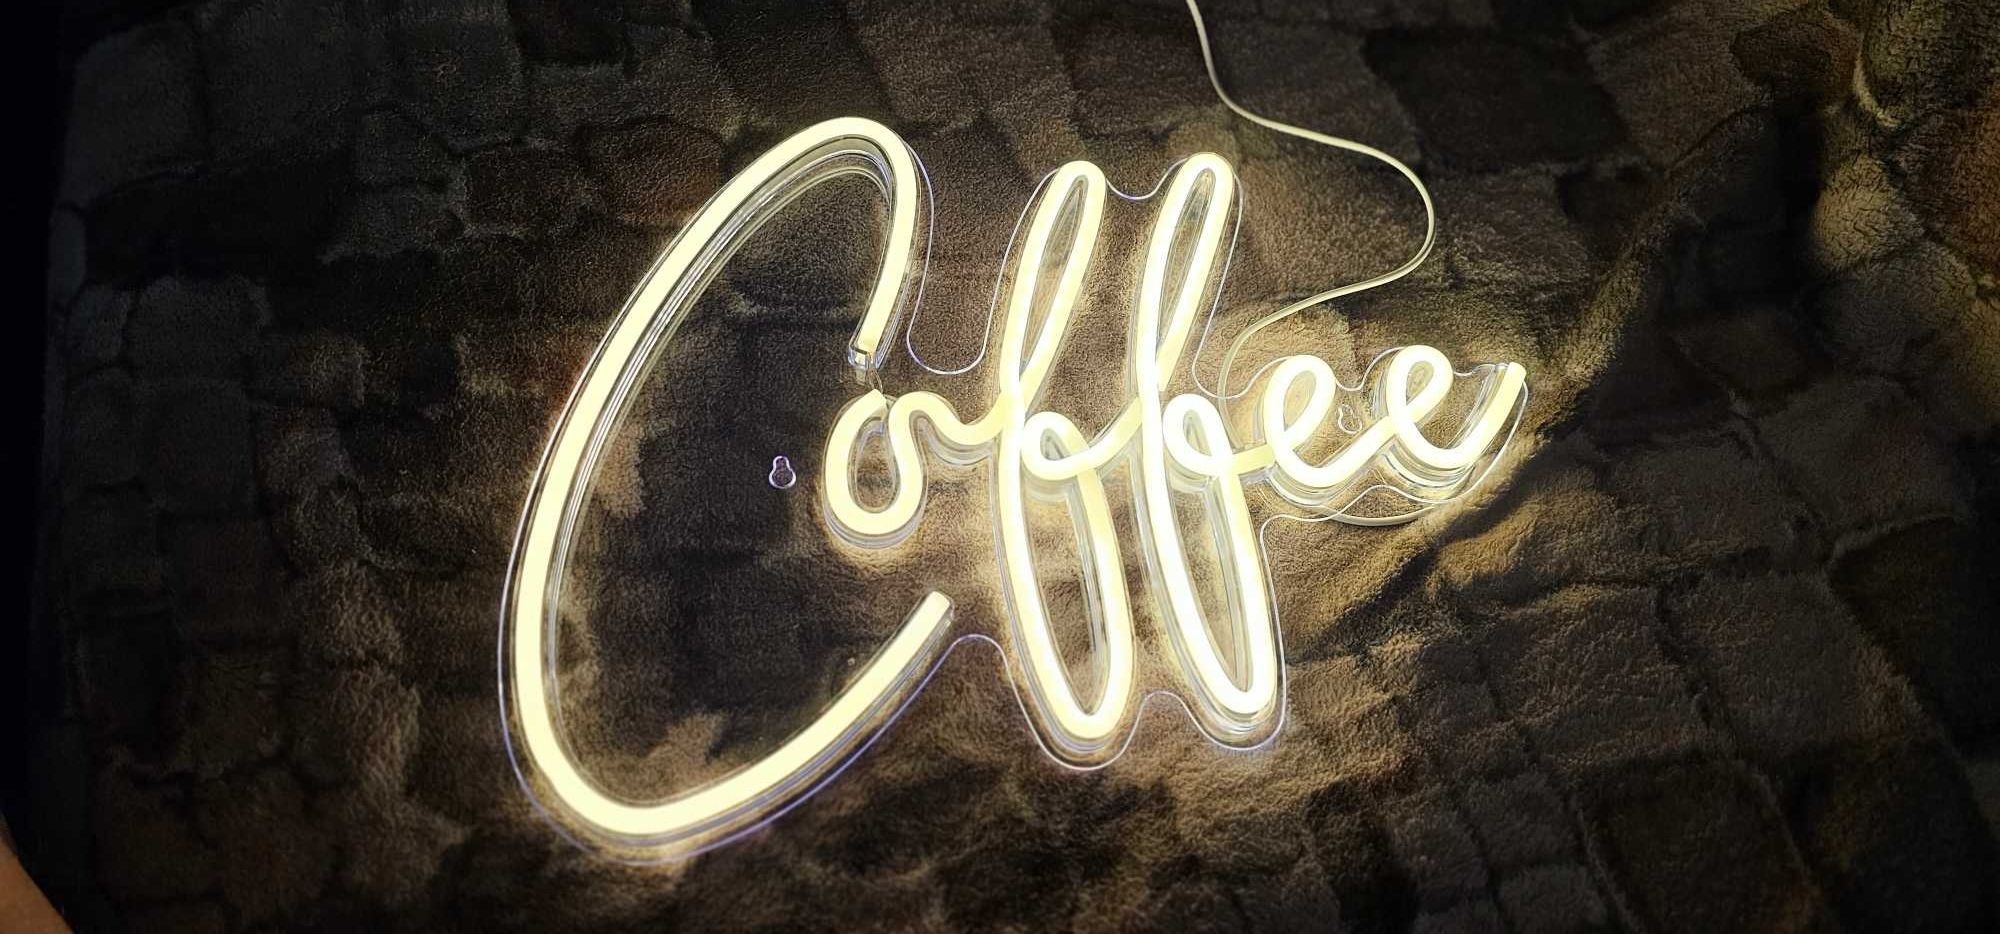 firma luminoasa neon coffe